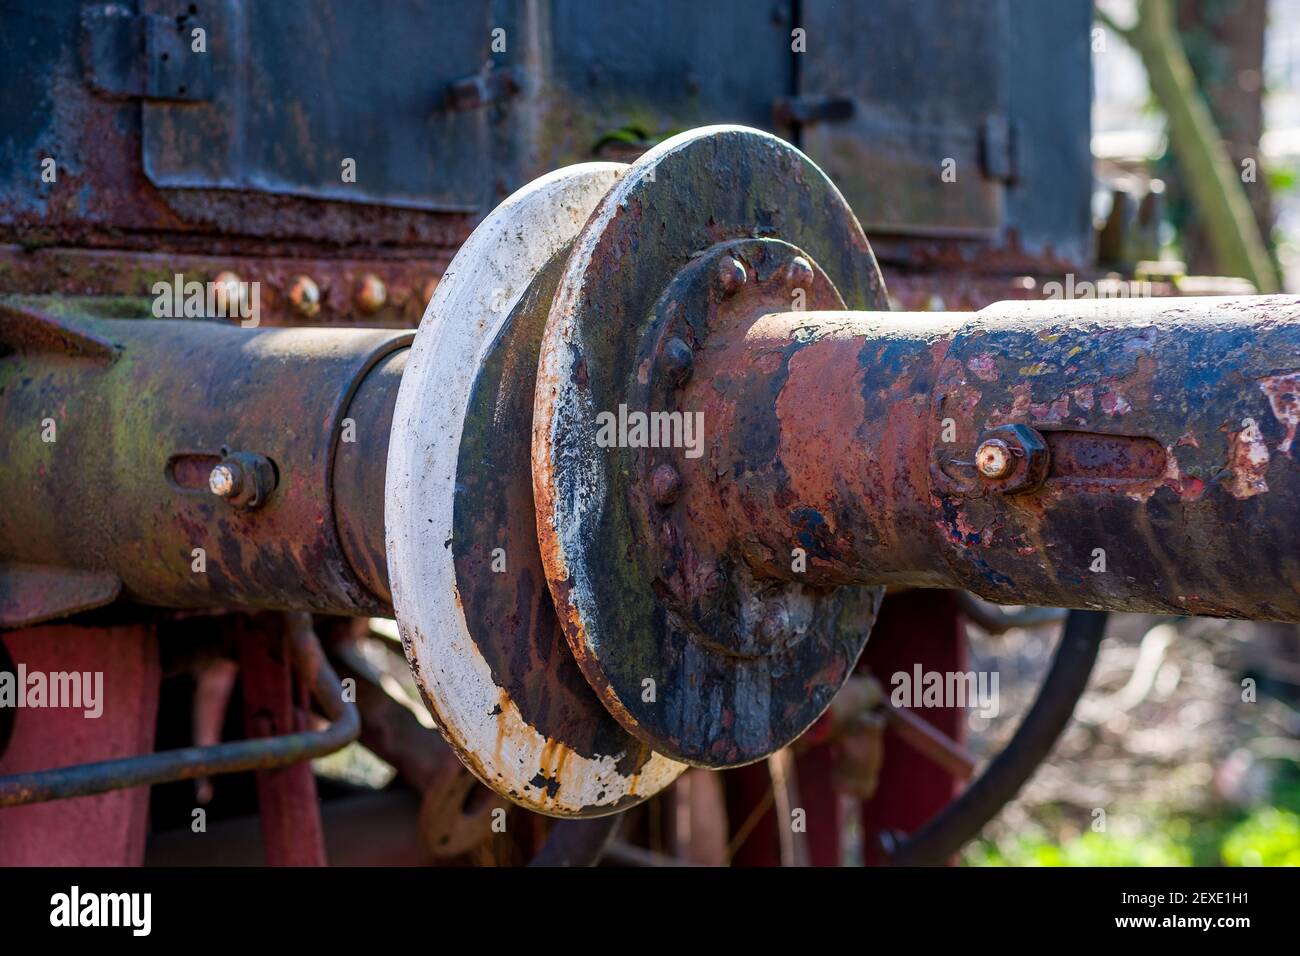 Details of an old steam locomotive, Craiova railway station, Romania, EU. Stock Photo